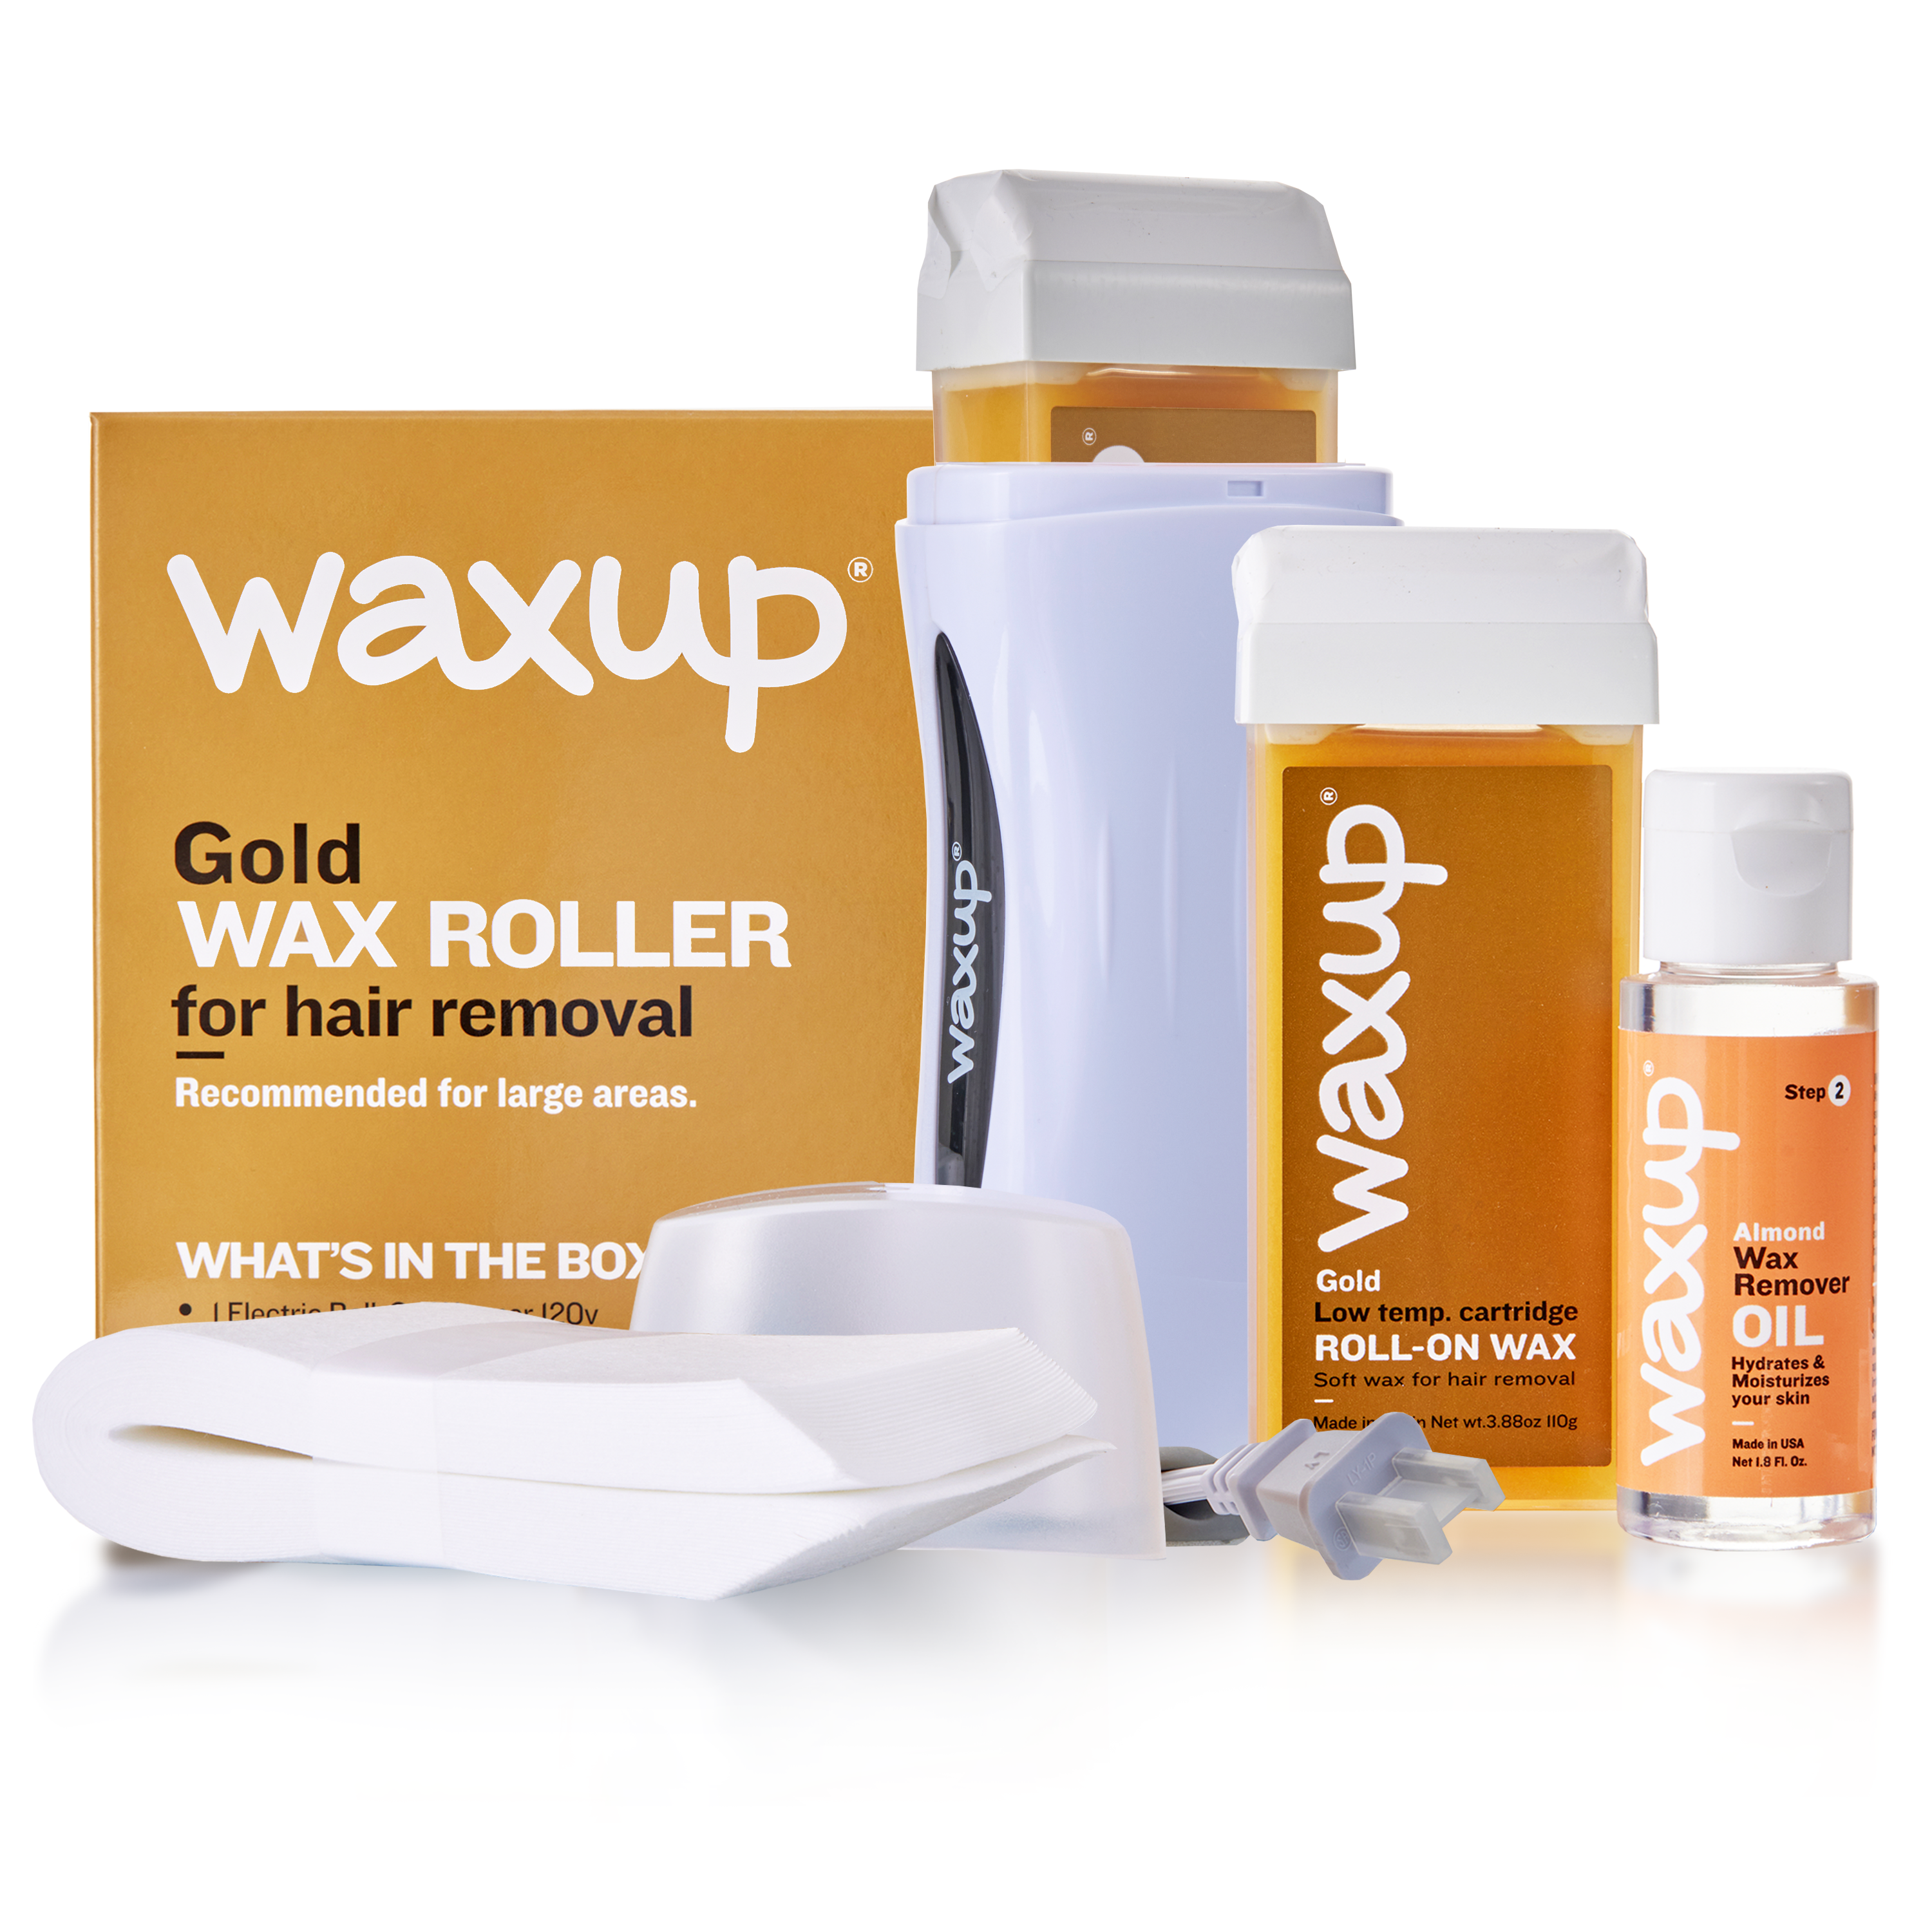 waxup Gold Roller Waxing Kit.